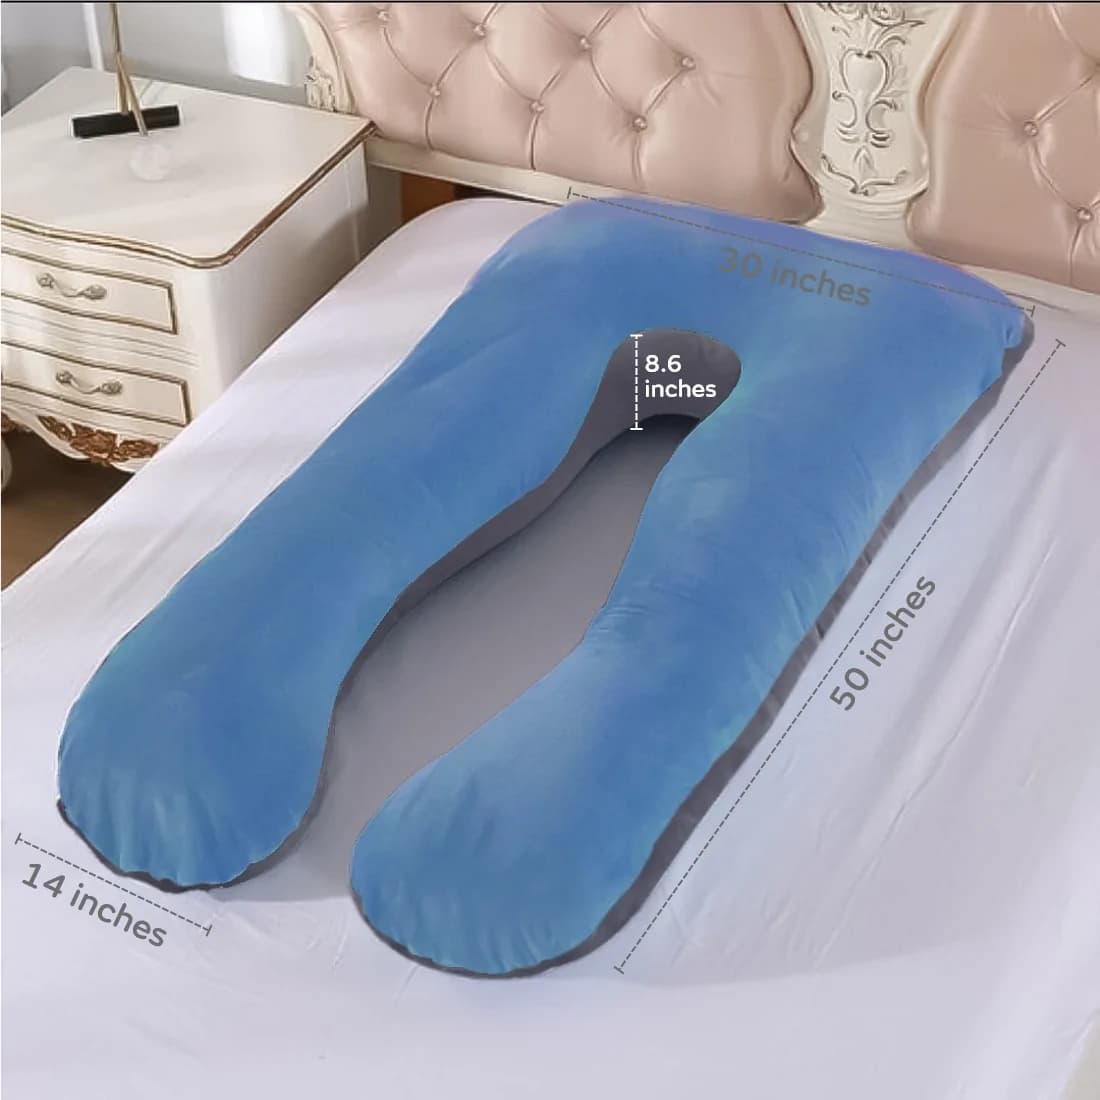 Premium Pregnancy & Maternity Support Pillow (Dual Tone - Blue & Dark Grey)